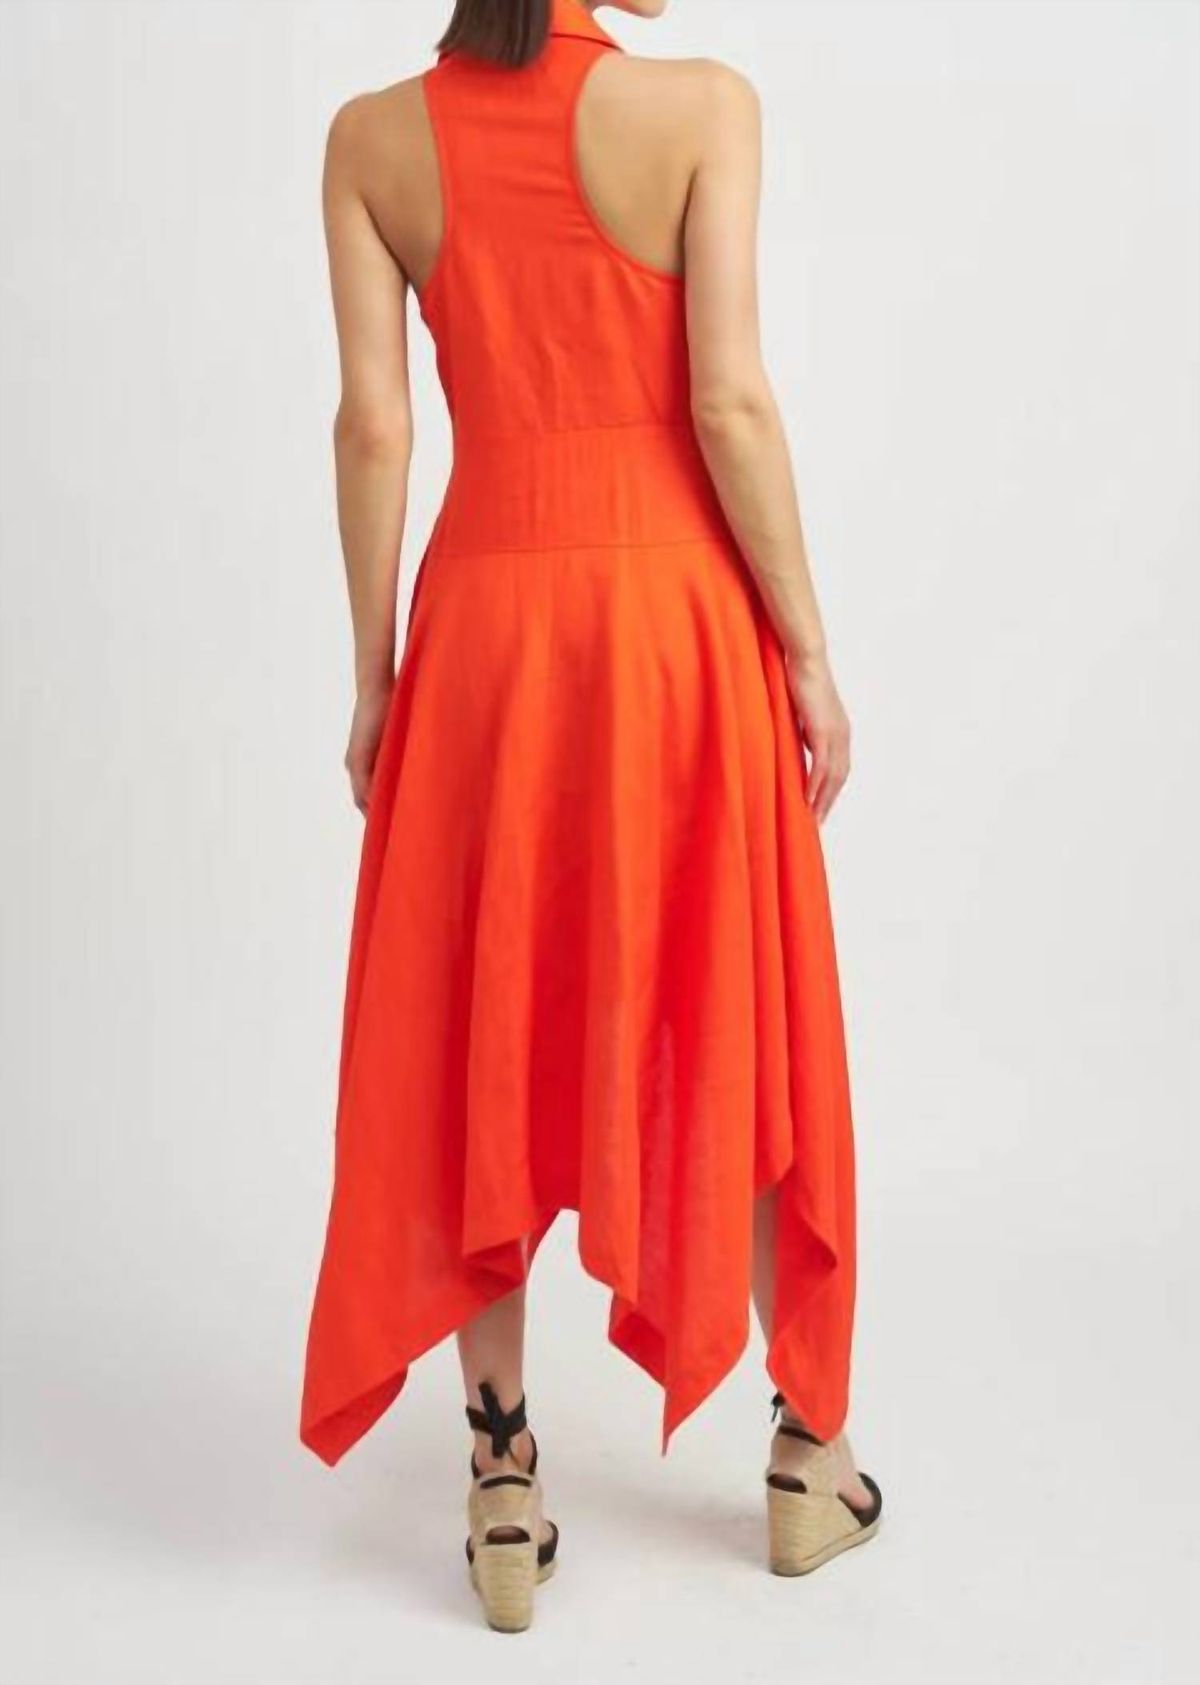 Style 1-1270903777-3236 En Saison Size S High Neck Orange Cocktail Dress on Queenly